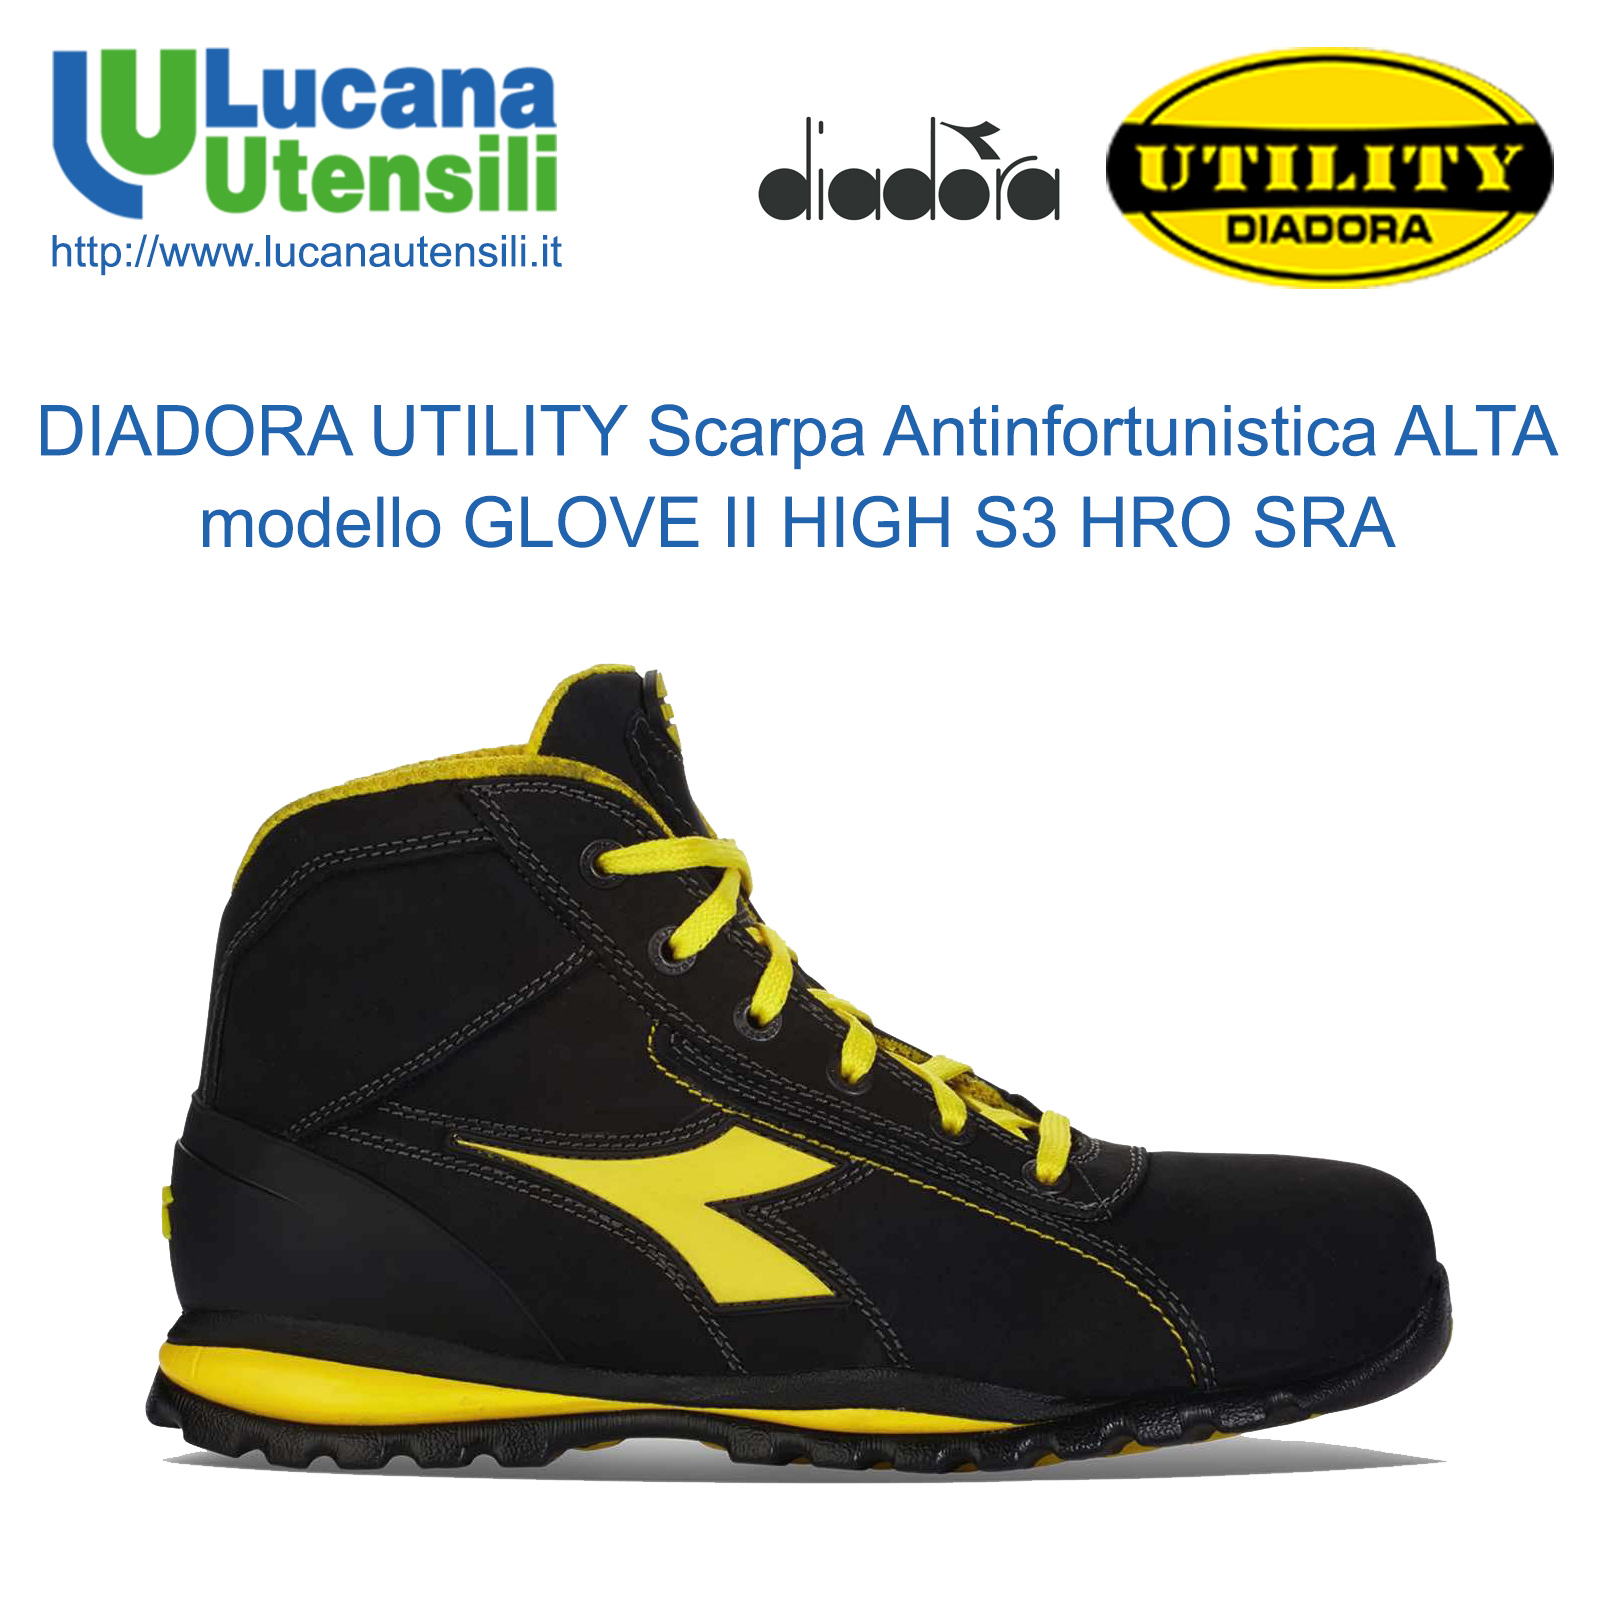 utility diadora scarpe